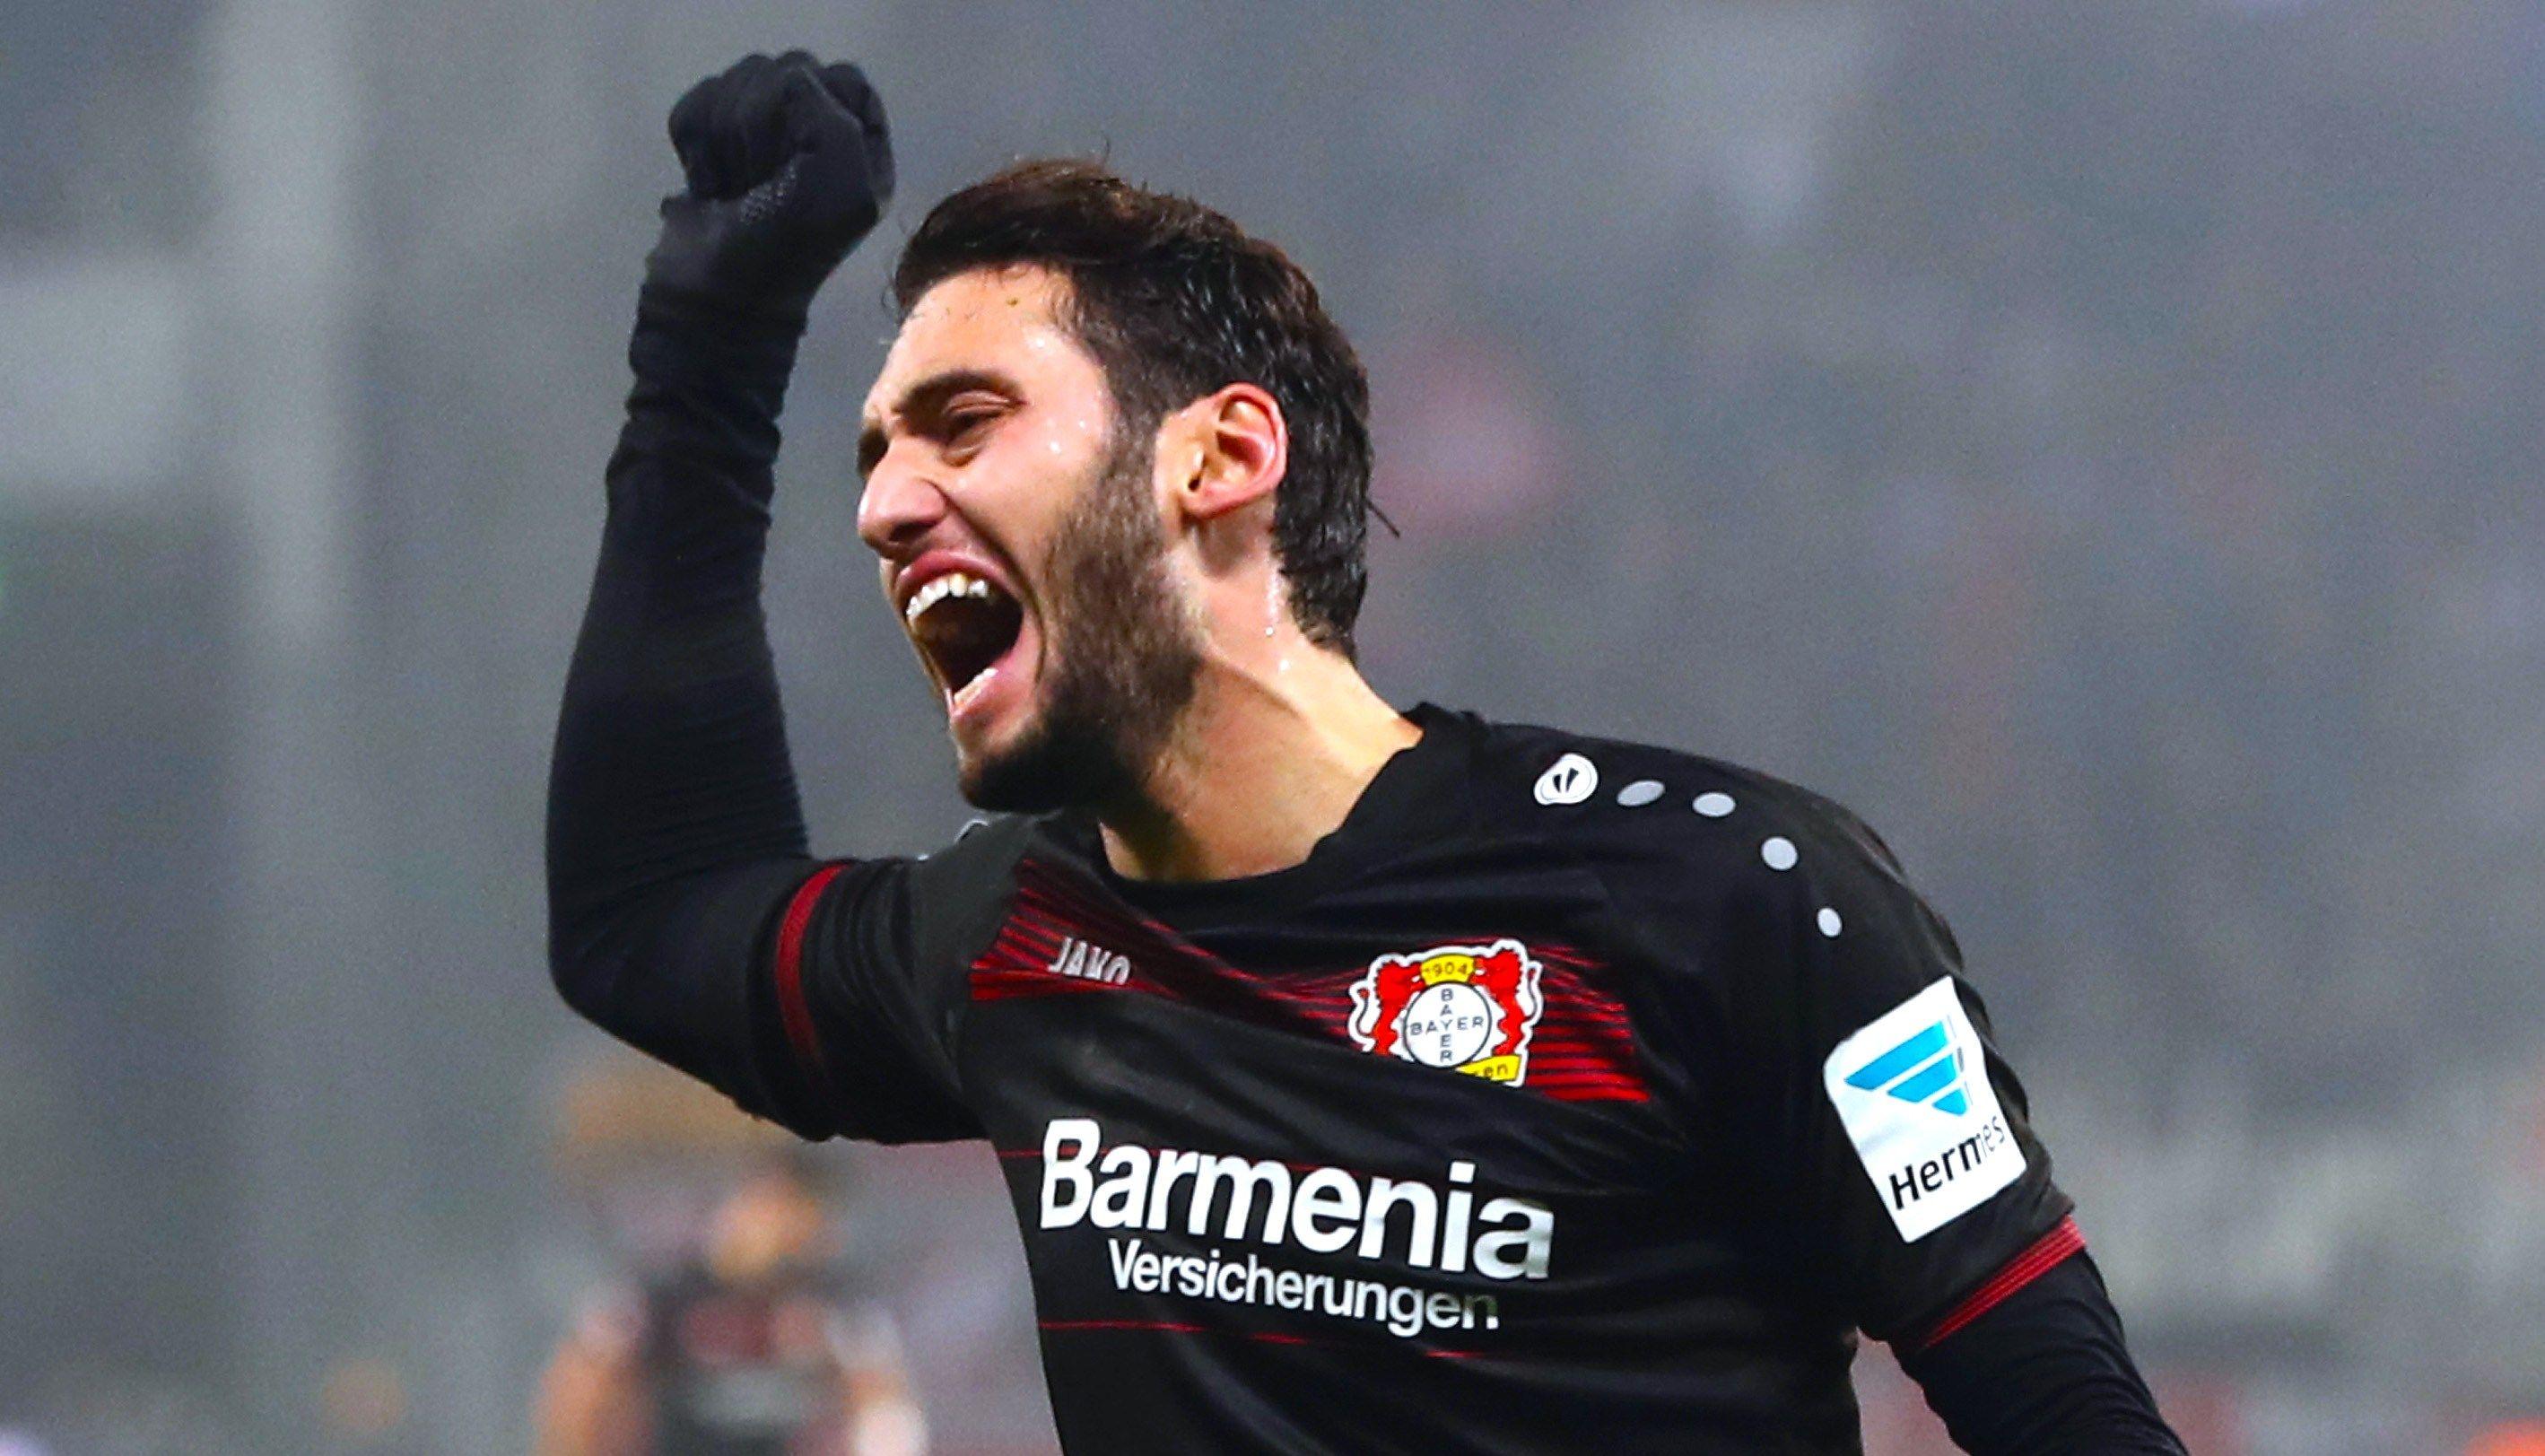 Profiling Leverkusen star and AC Milan target Hakan Calhanoglu